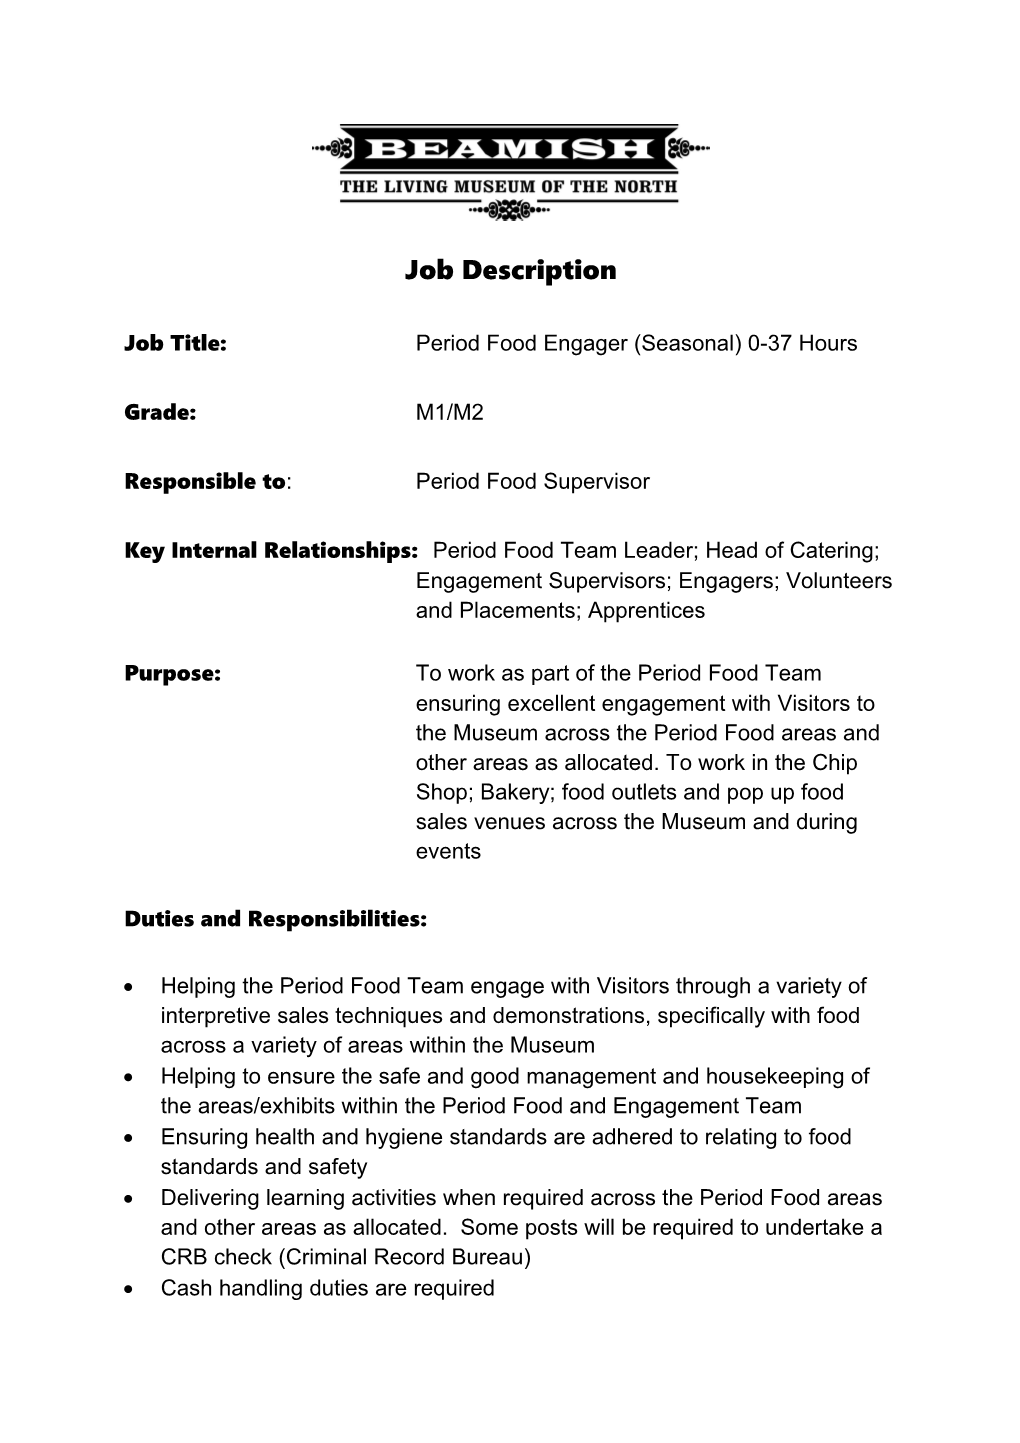 Job Title: Period Foodengager(Seasonal) 0-37 Hours